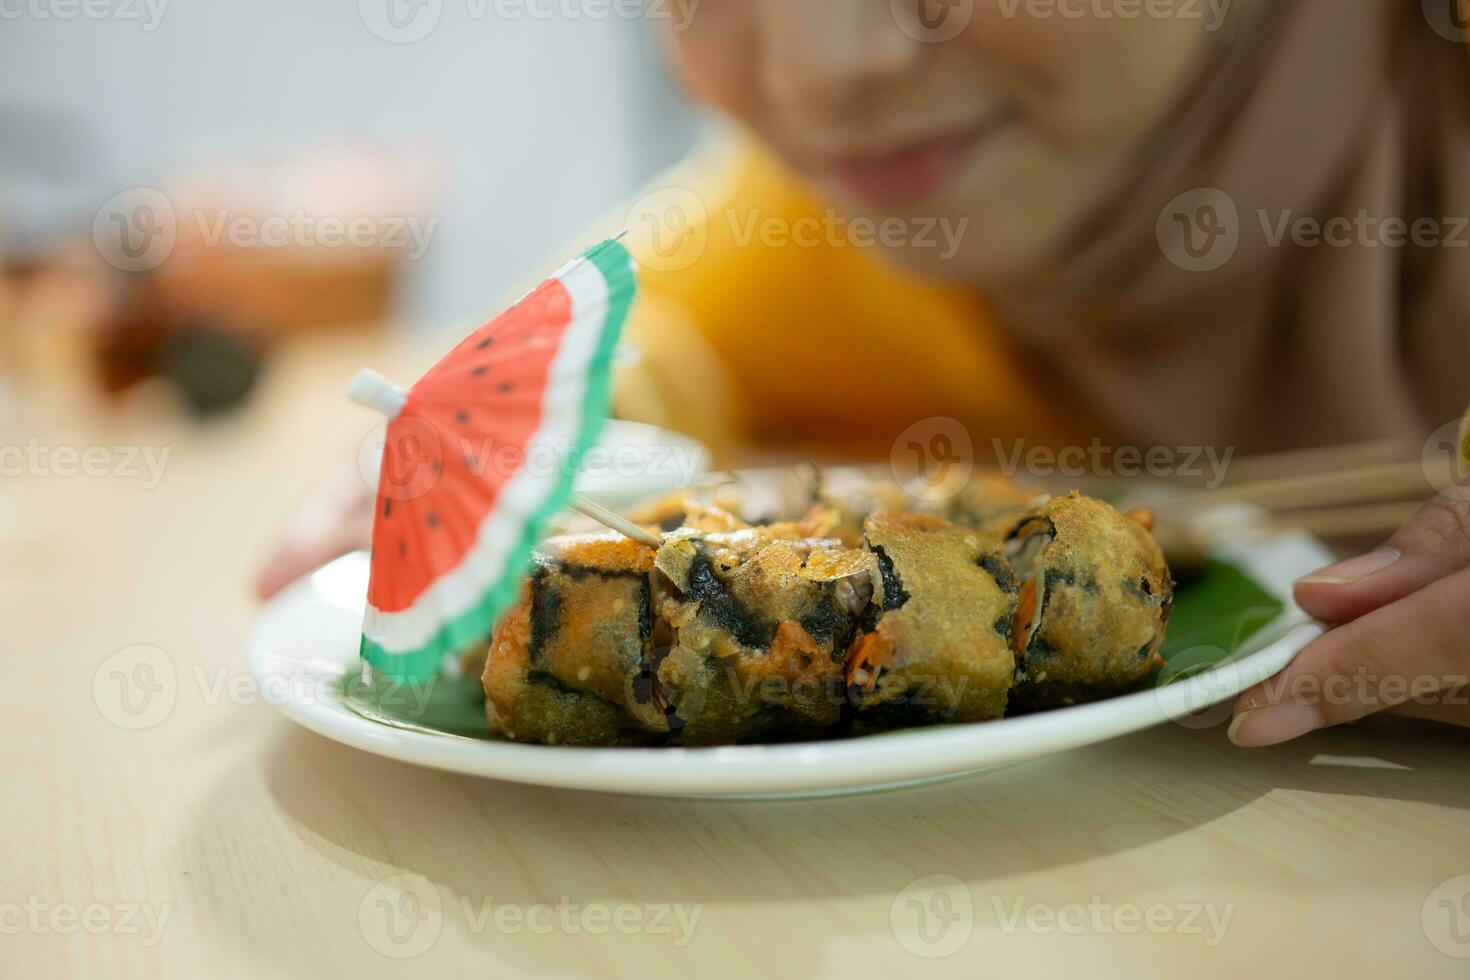 Muslim girl eating mushroom sushi at the restaurant. Selective focus on sushi photo